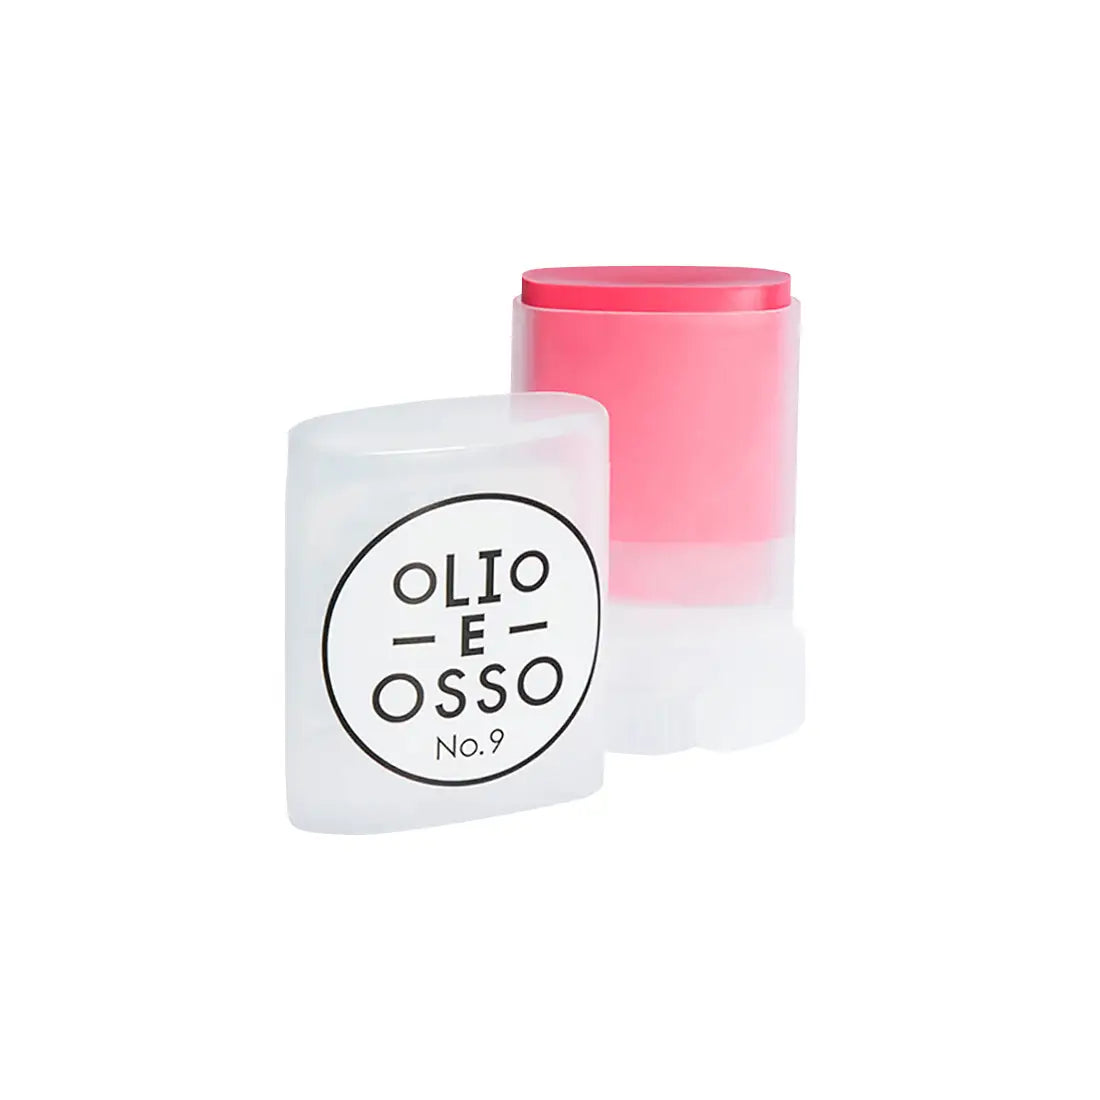 Olio E Osso Tinted Balm No. 9 Spring - Free Shipping 